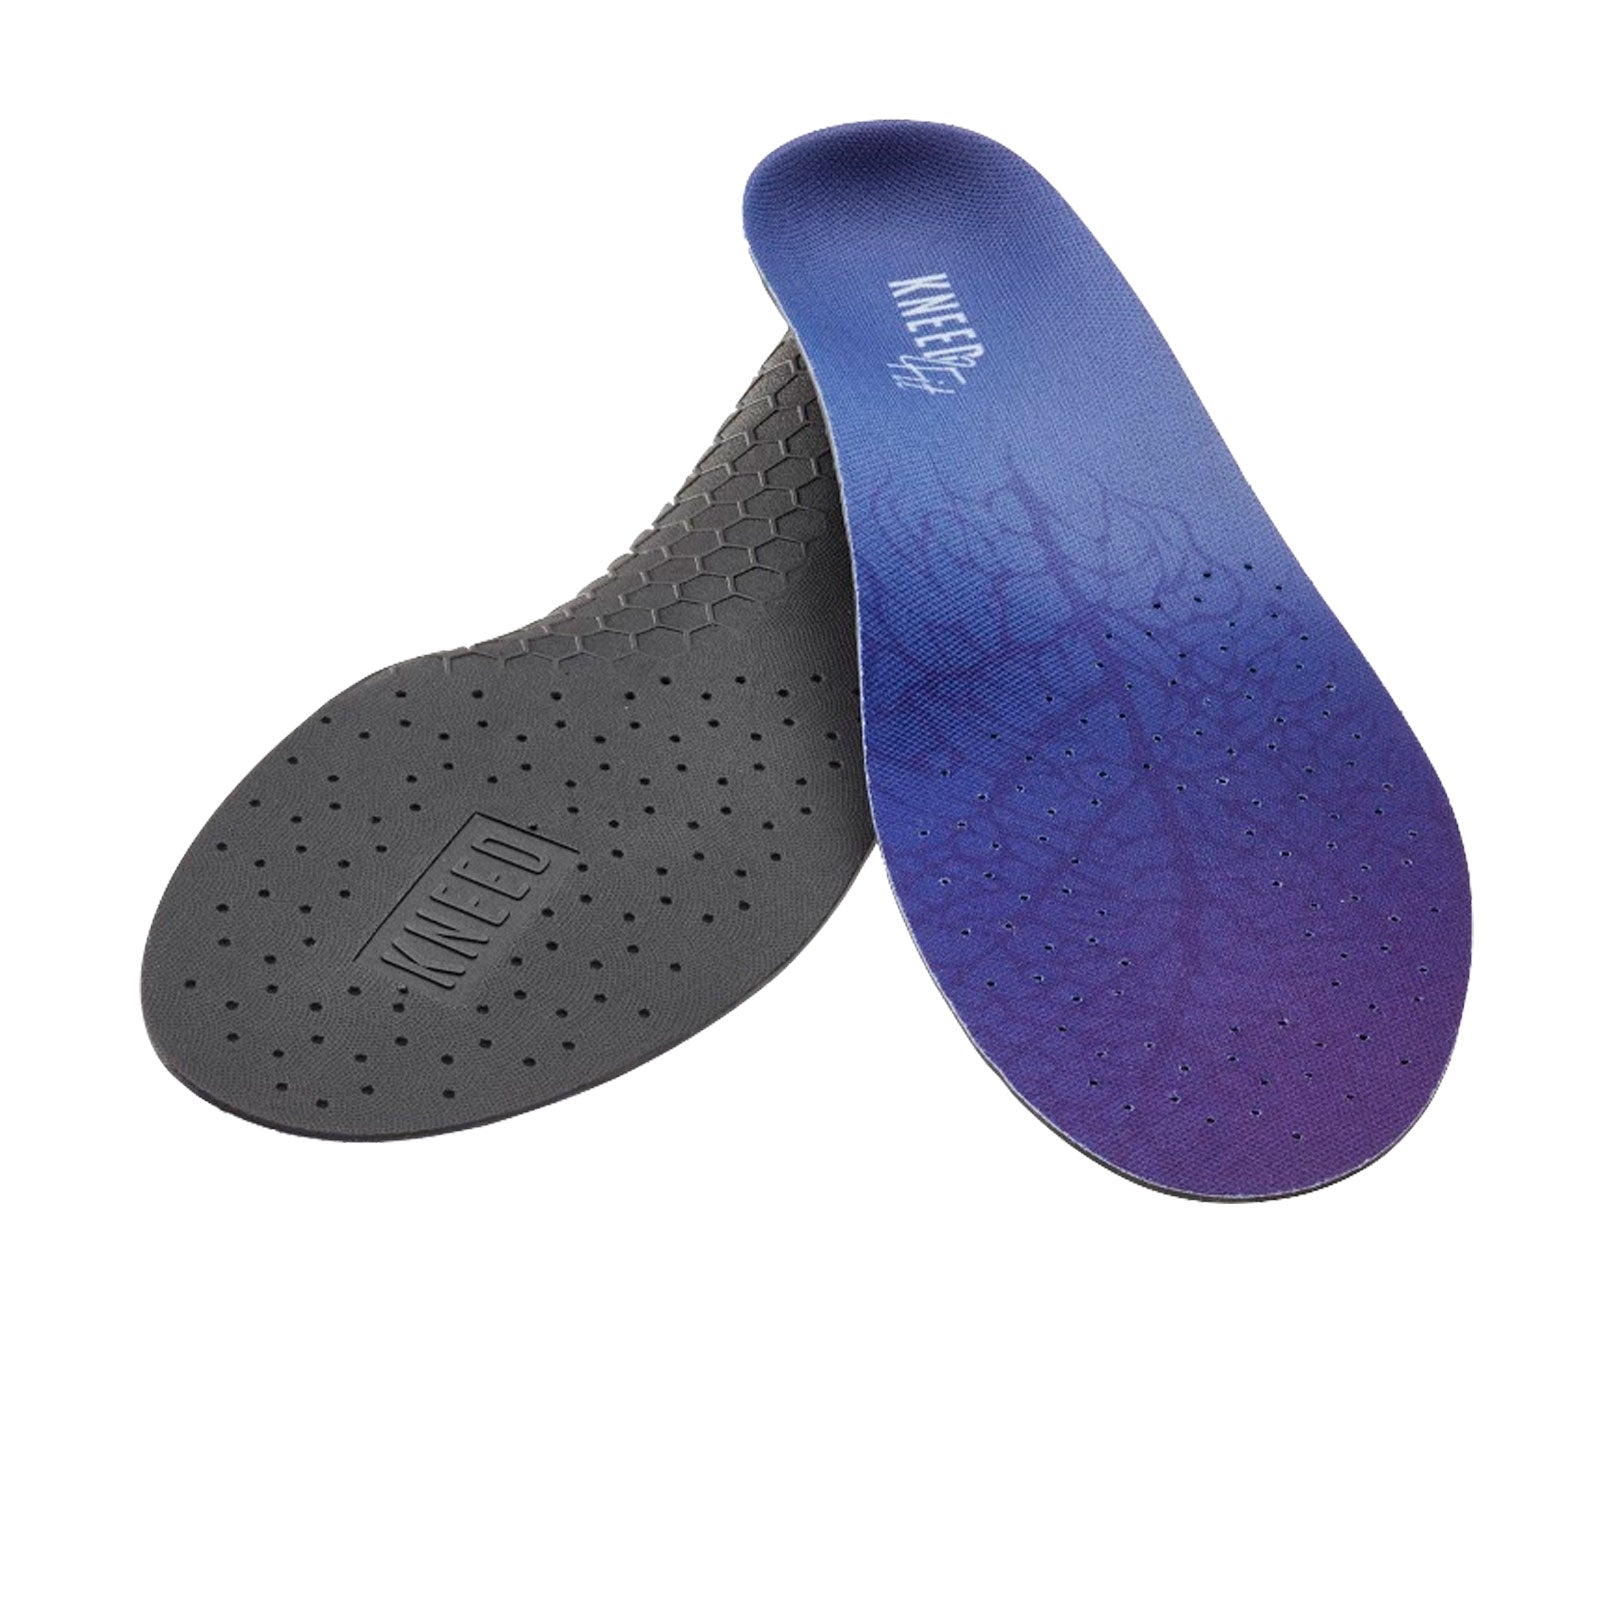 Kneed 2 Fit Orthotic (Unisex) - Blue Orthotics - Full Length - Neutral - The Heel Shoe Fitters